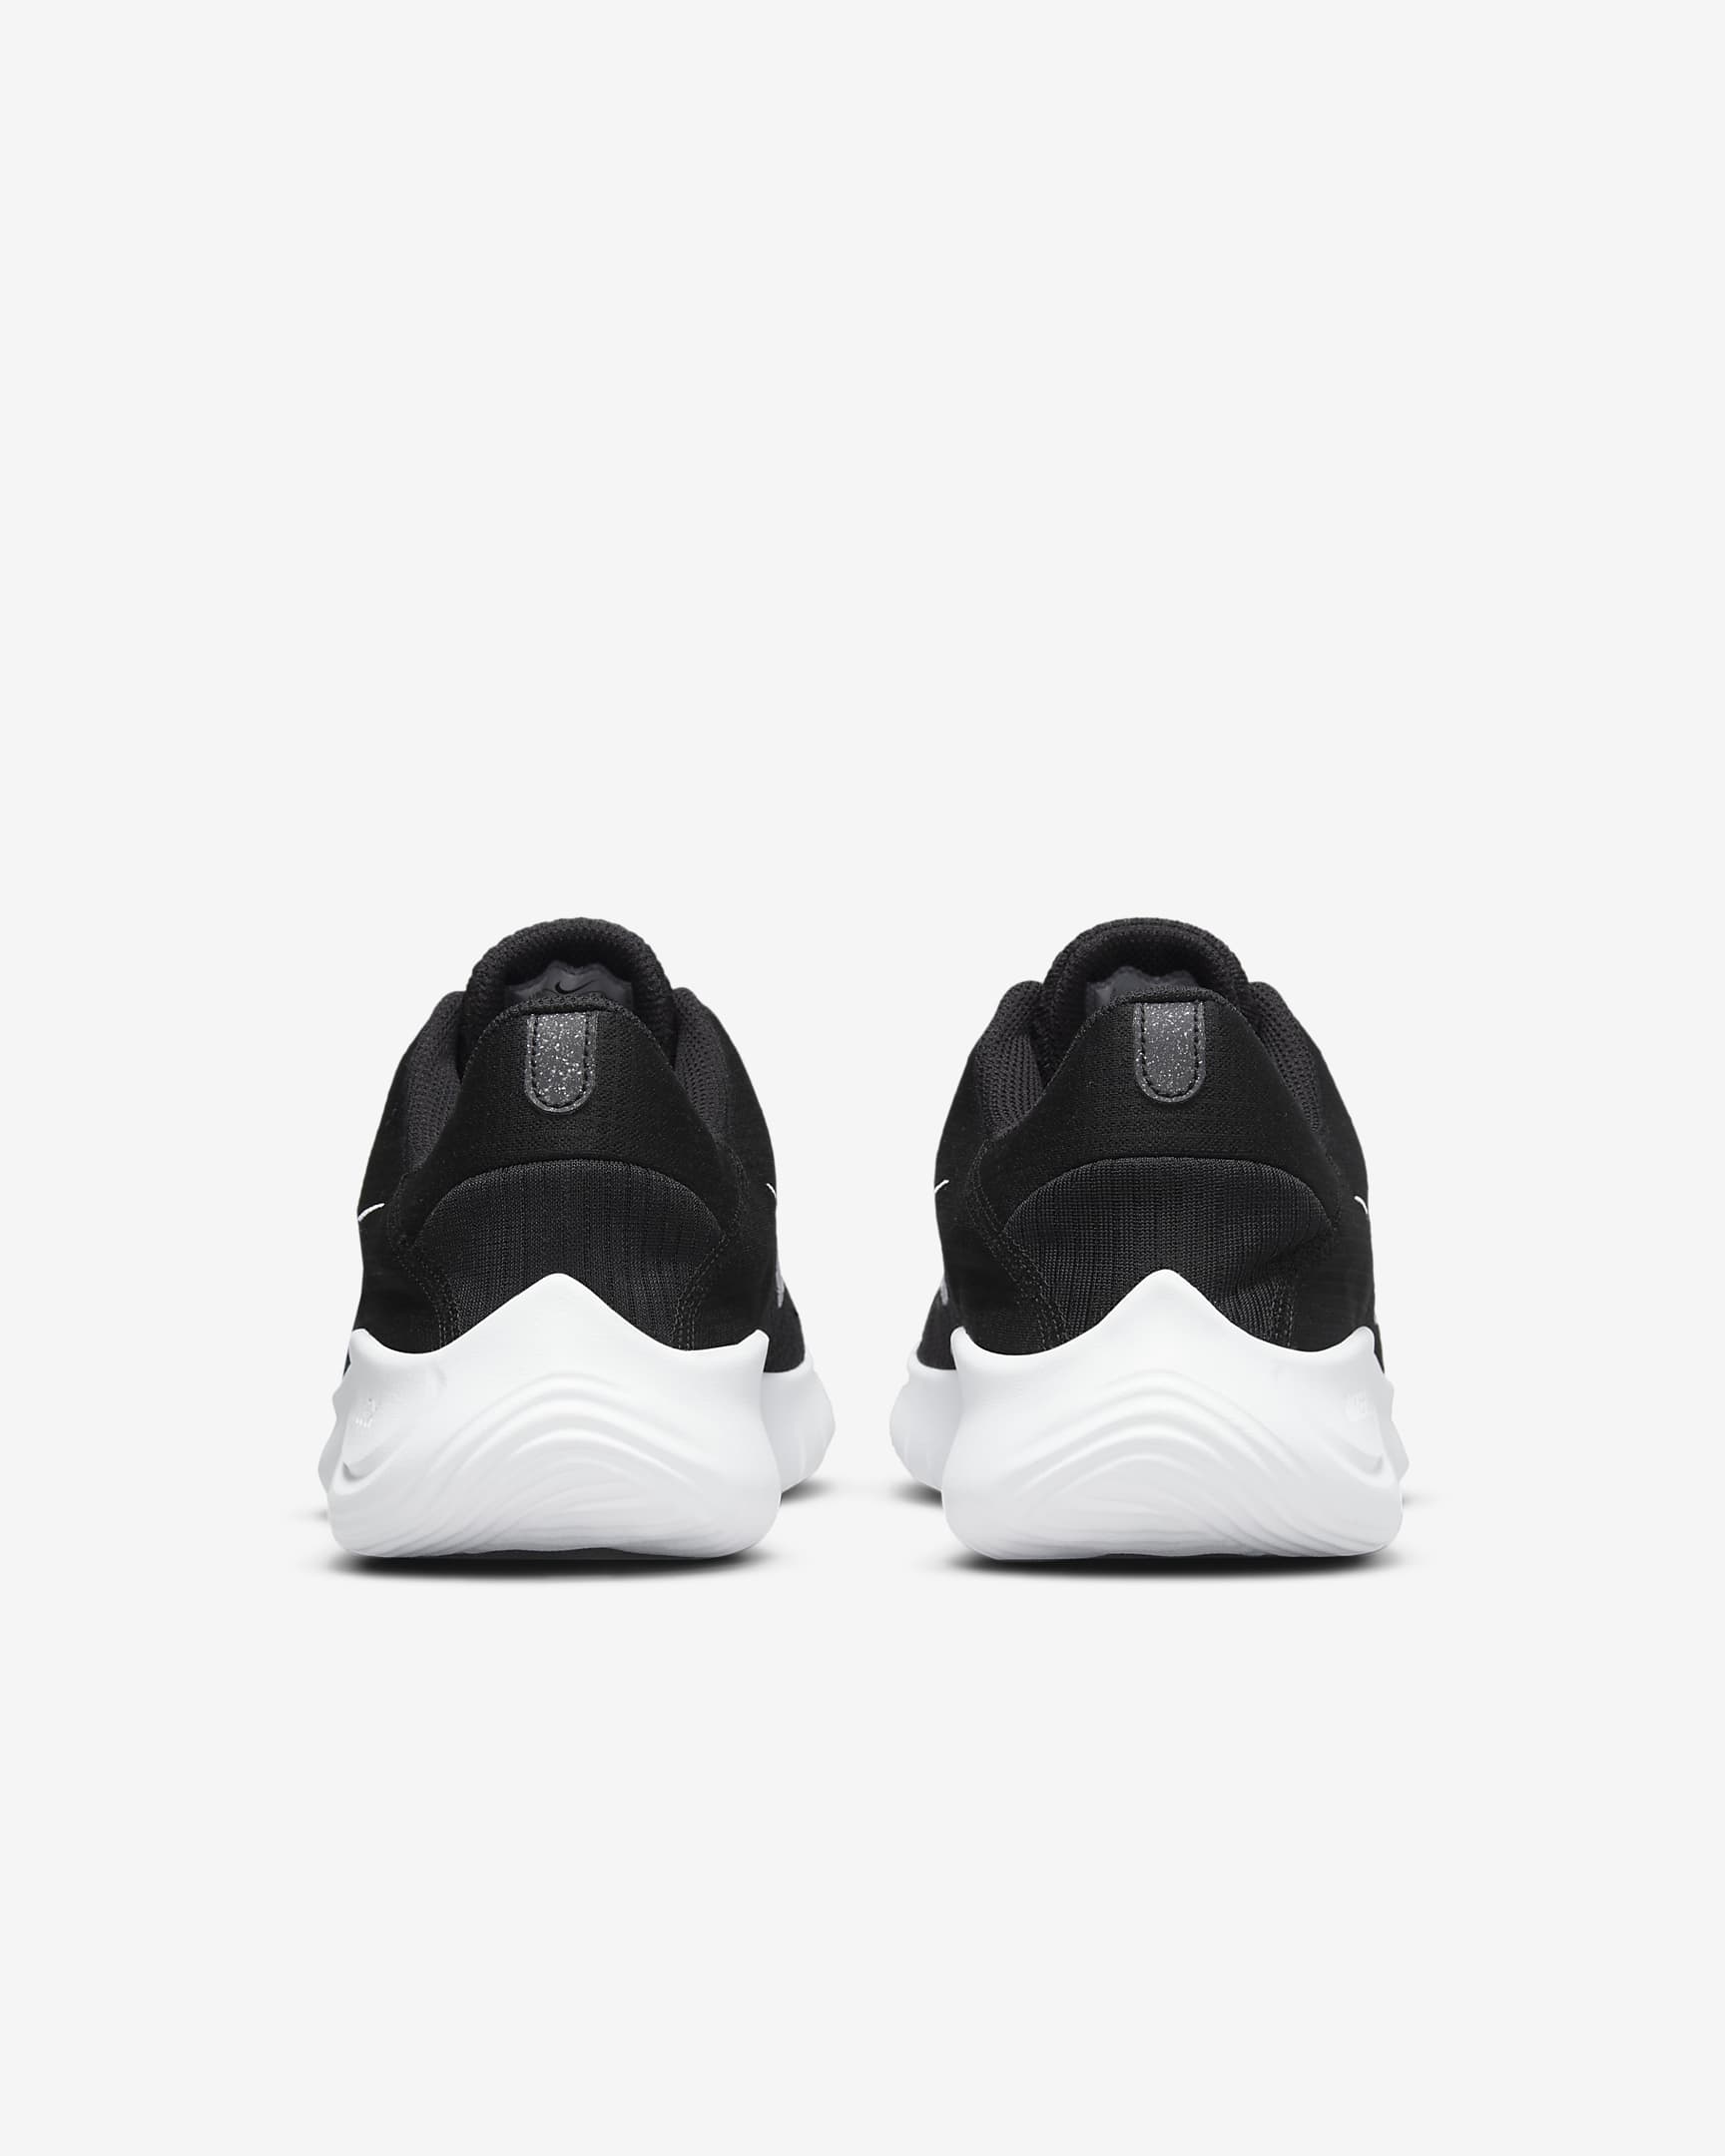 Nike Flex Experience Run 11 Men's Road Running Shoes - Black/White